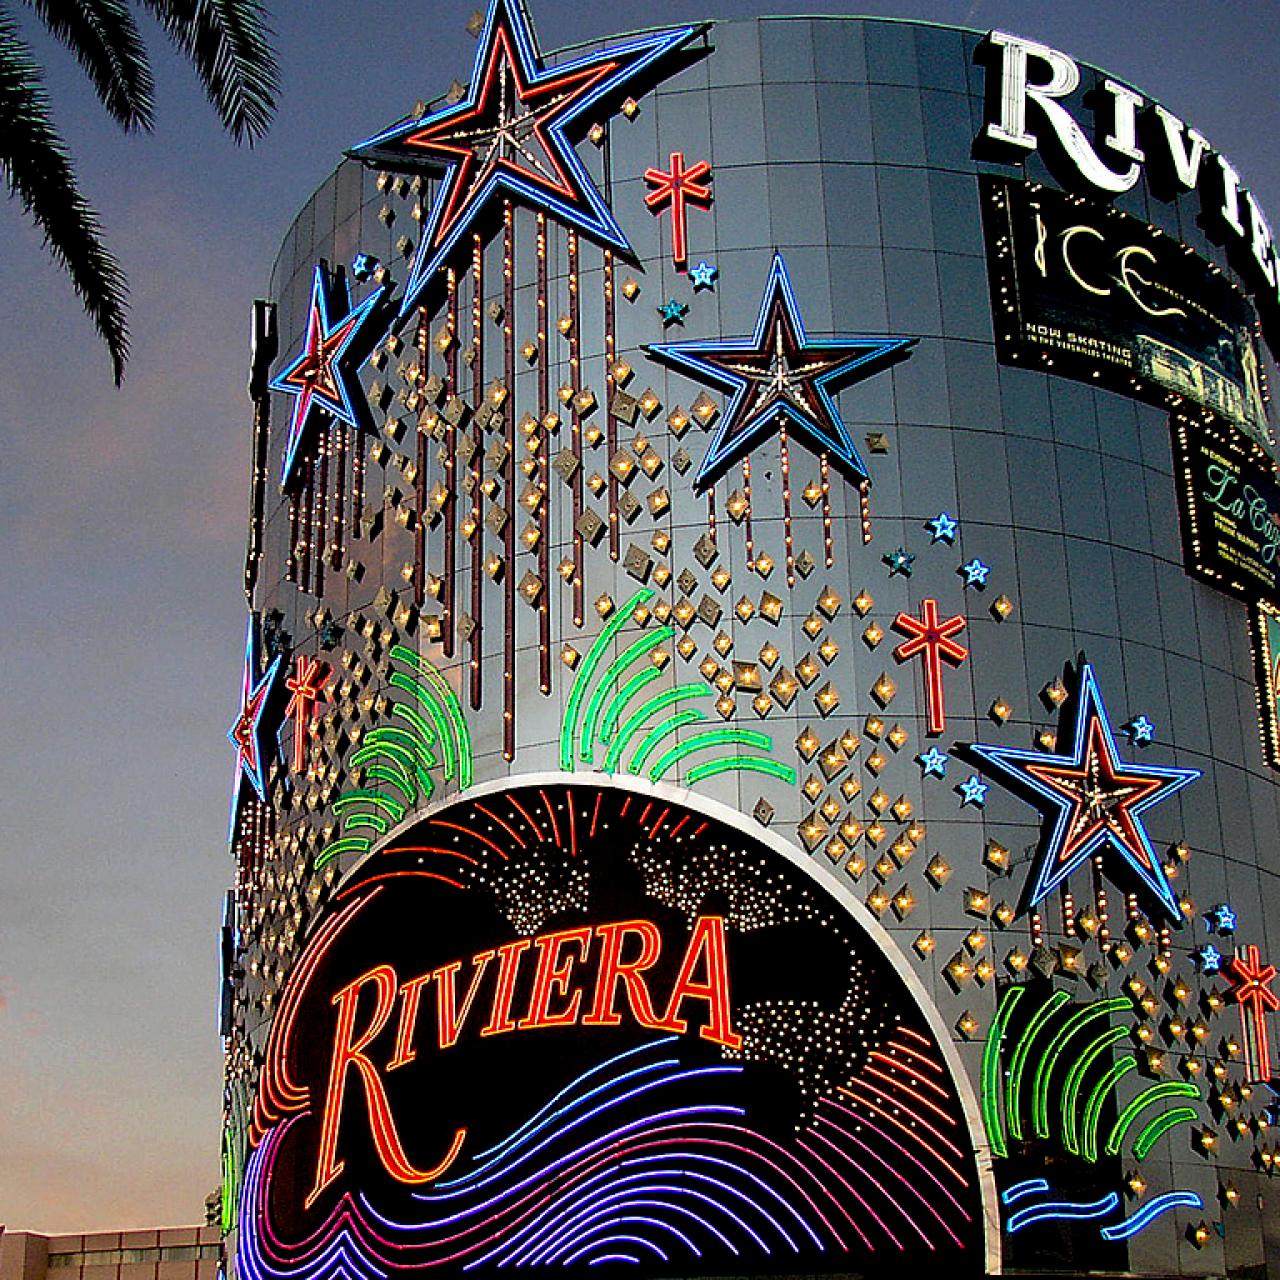 Riviera Hotel Las Vegas - Riviera Hotel